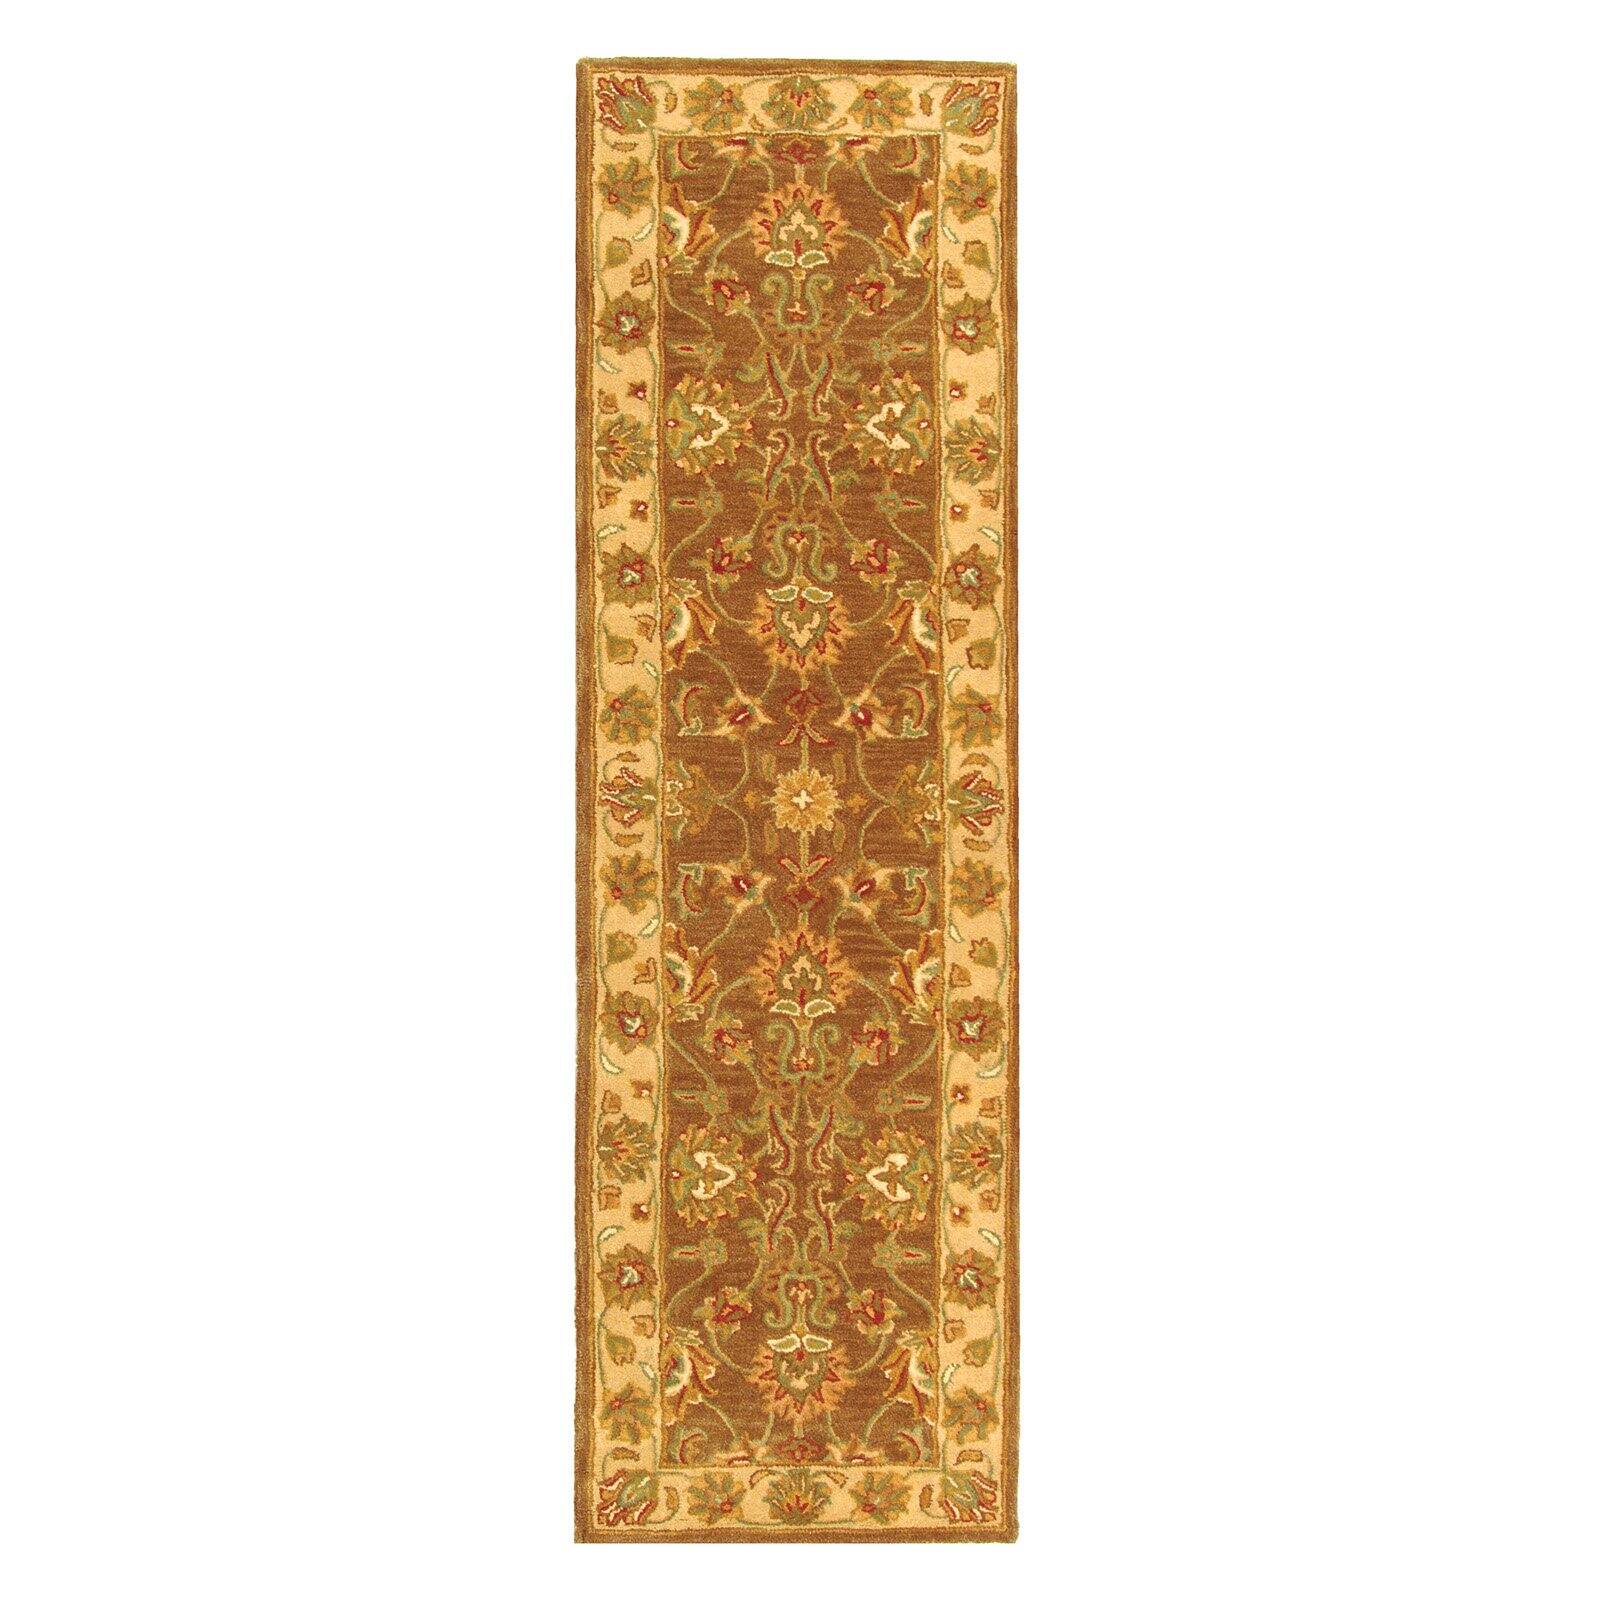 SAFAVIEH Heritage Regis Traditional Wool Area Rug, Brown/Ivory, 4'6" x 6'6" Oval - image 3 of 9